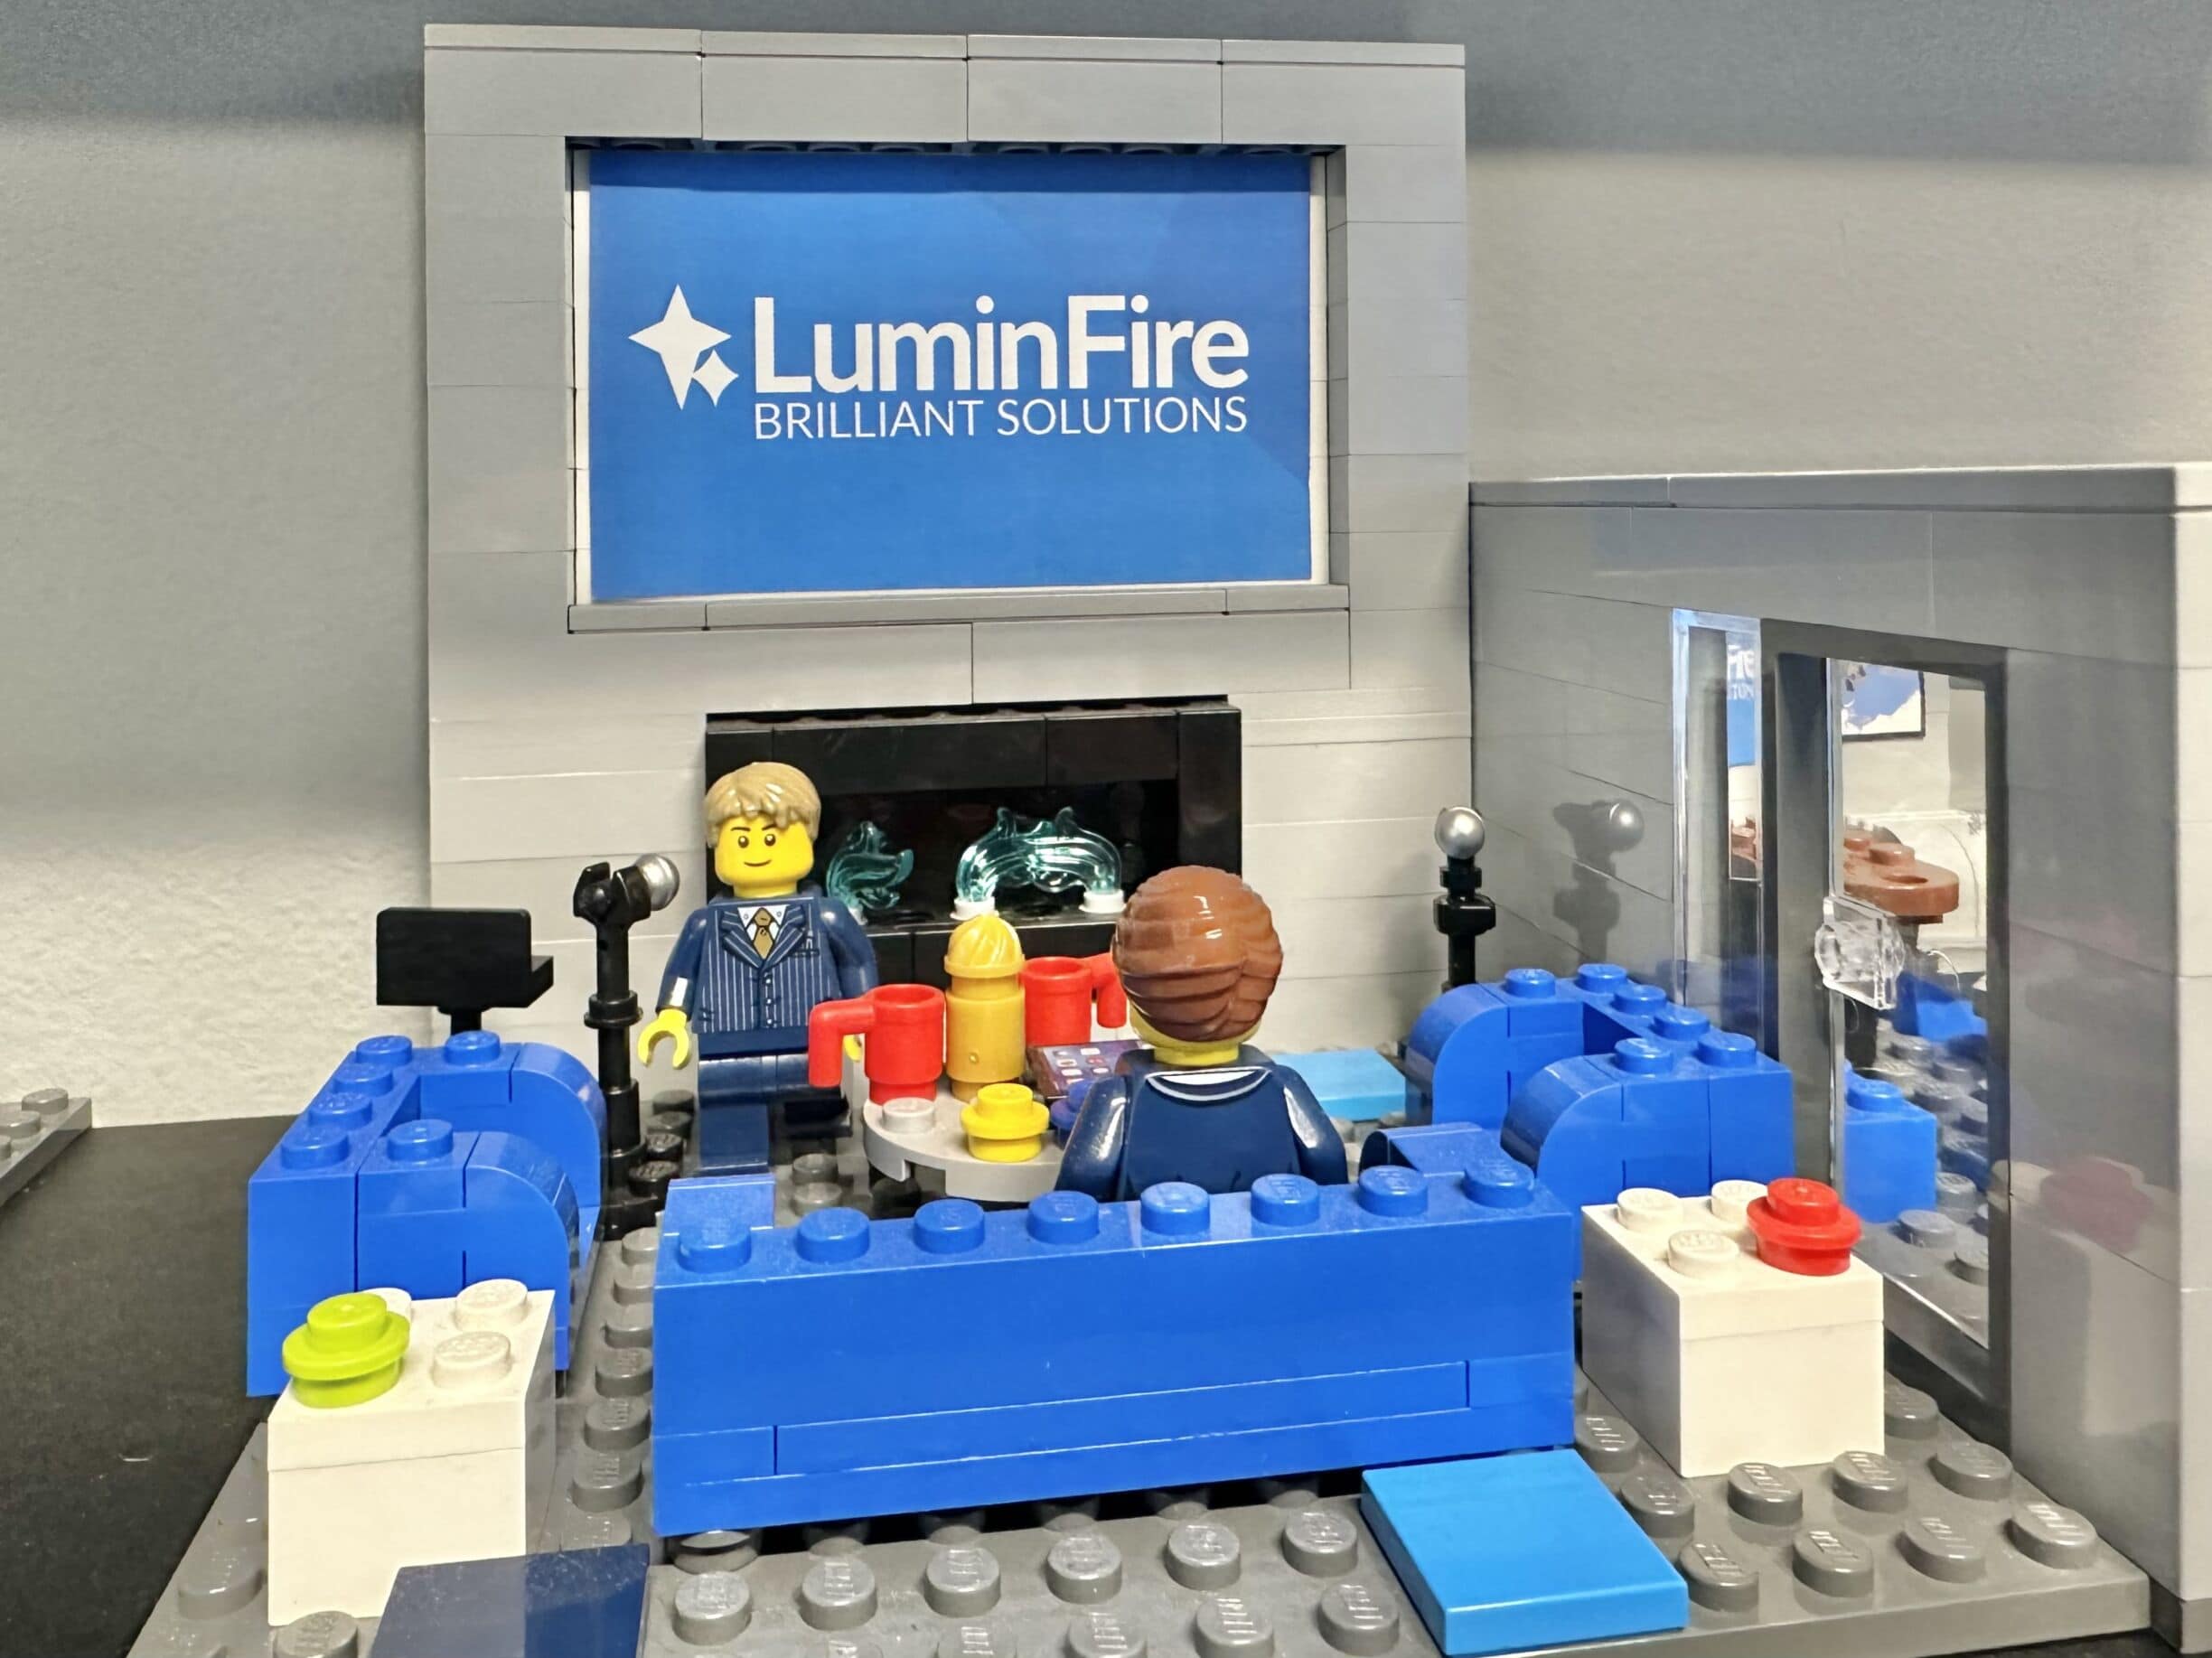 lego luminfire event fireplace